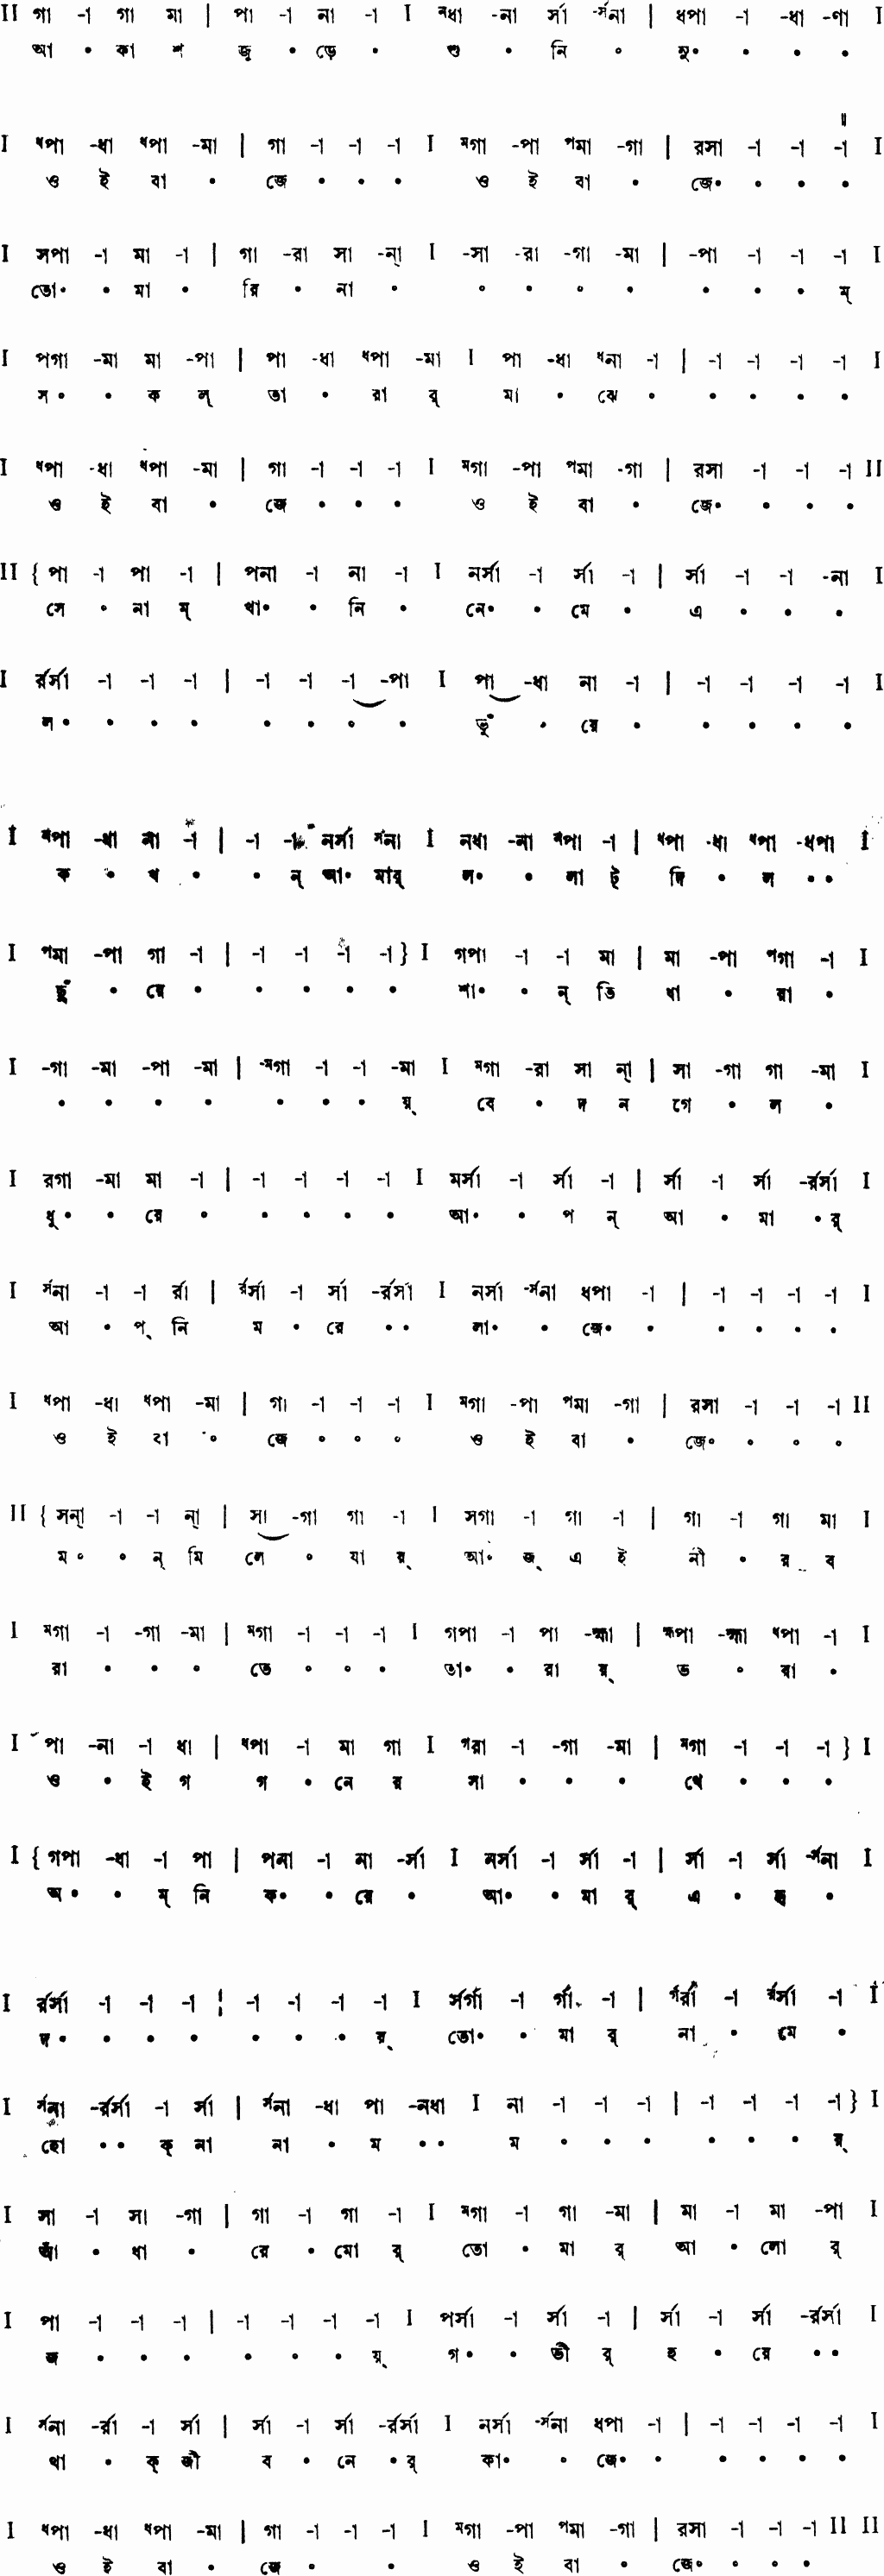 Notation akash jure shuninu oi